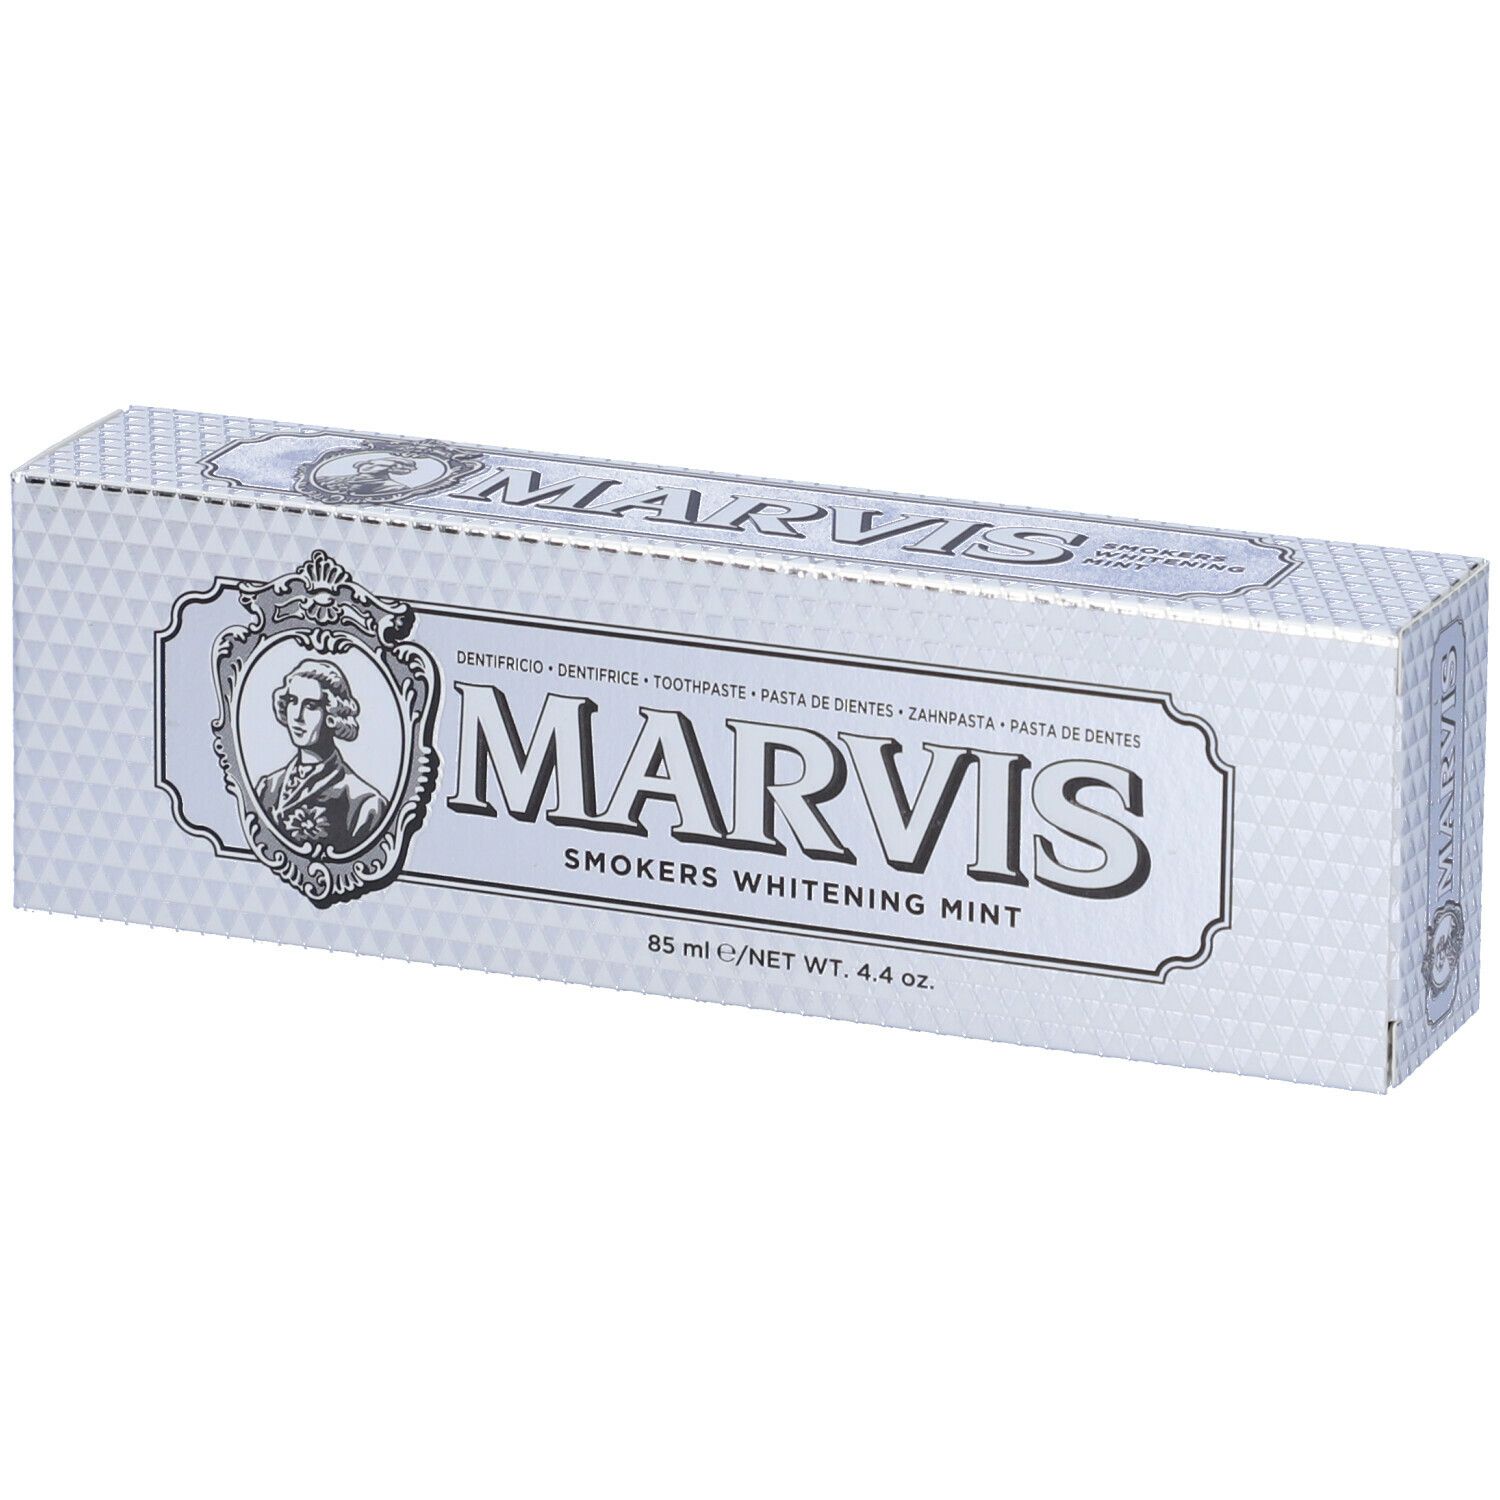 Marvis Smokers Whitening Mint 85 ml Dentifricio